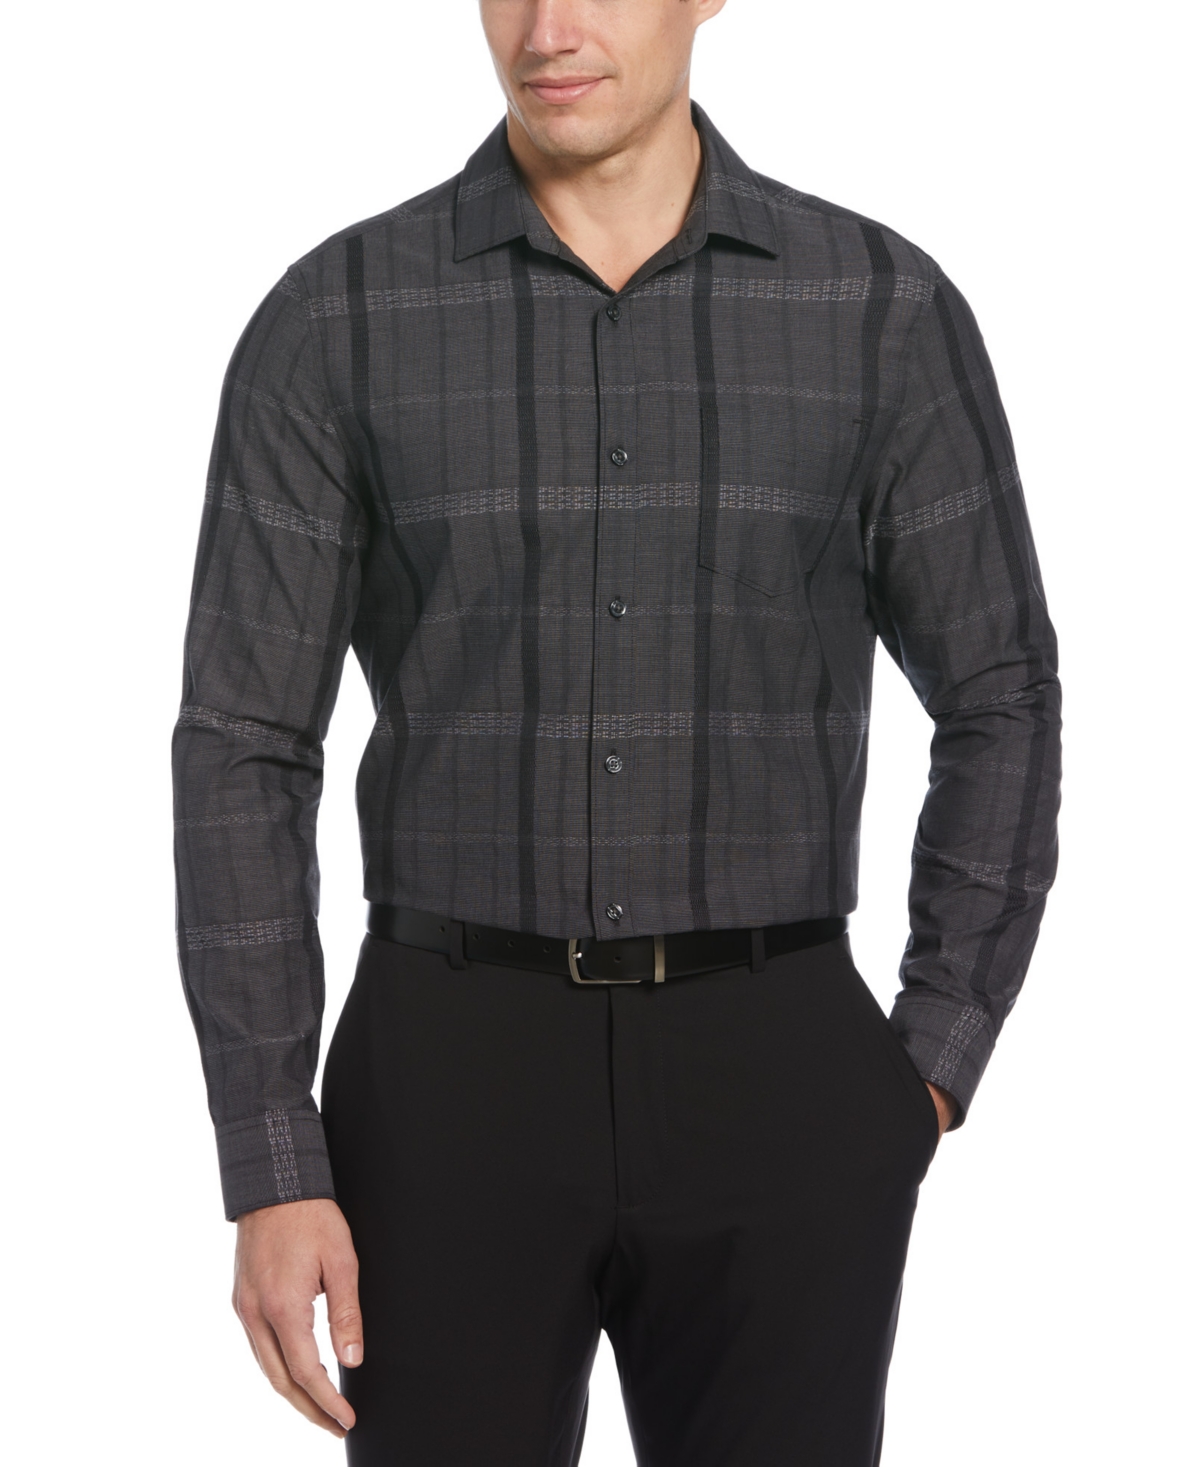 Men's Cotton Tonal Jacquard Plaid Button Shirt - Black